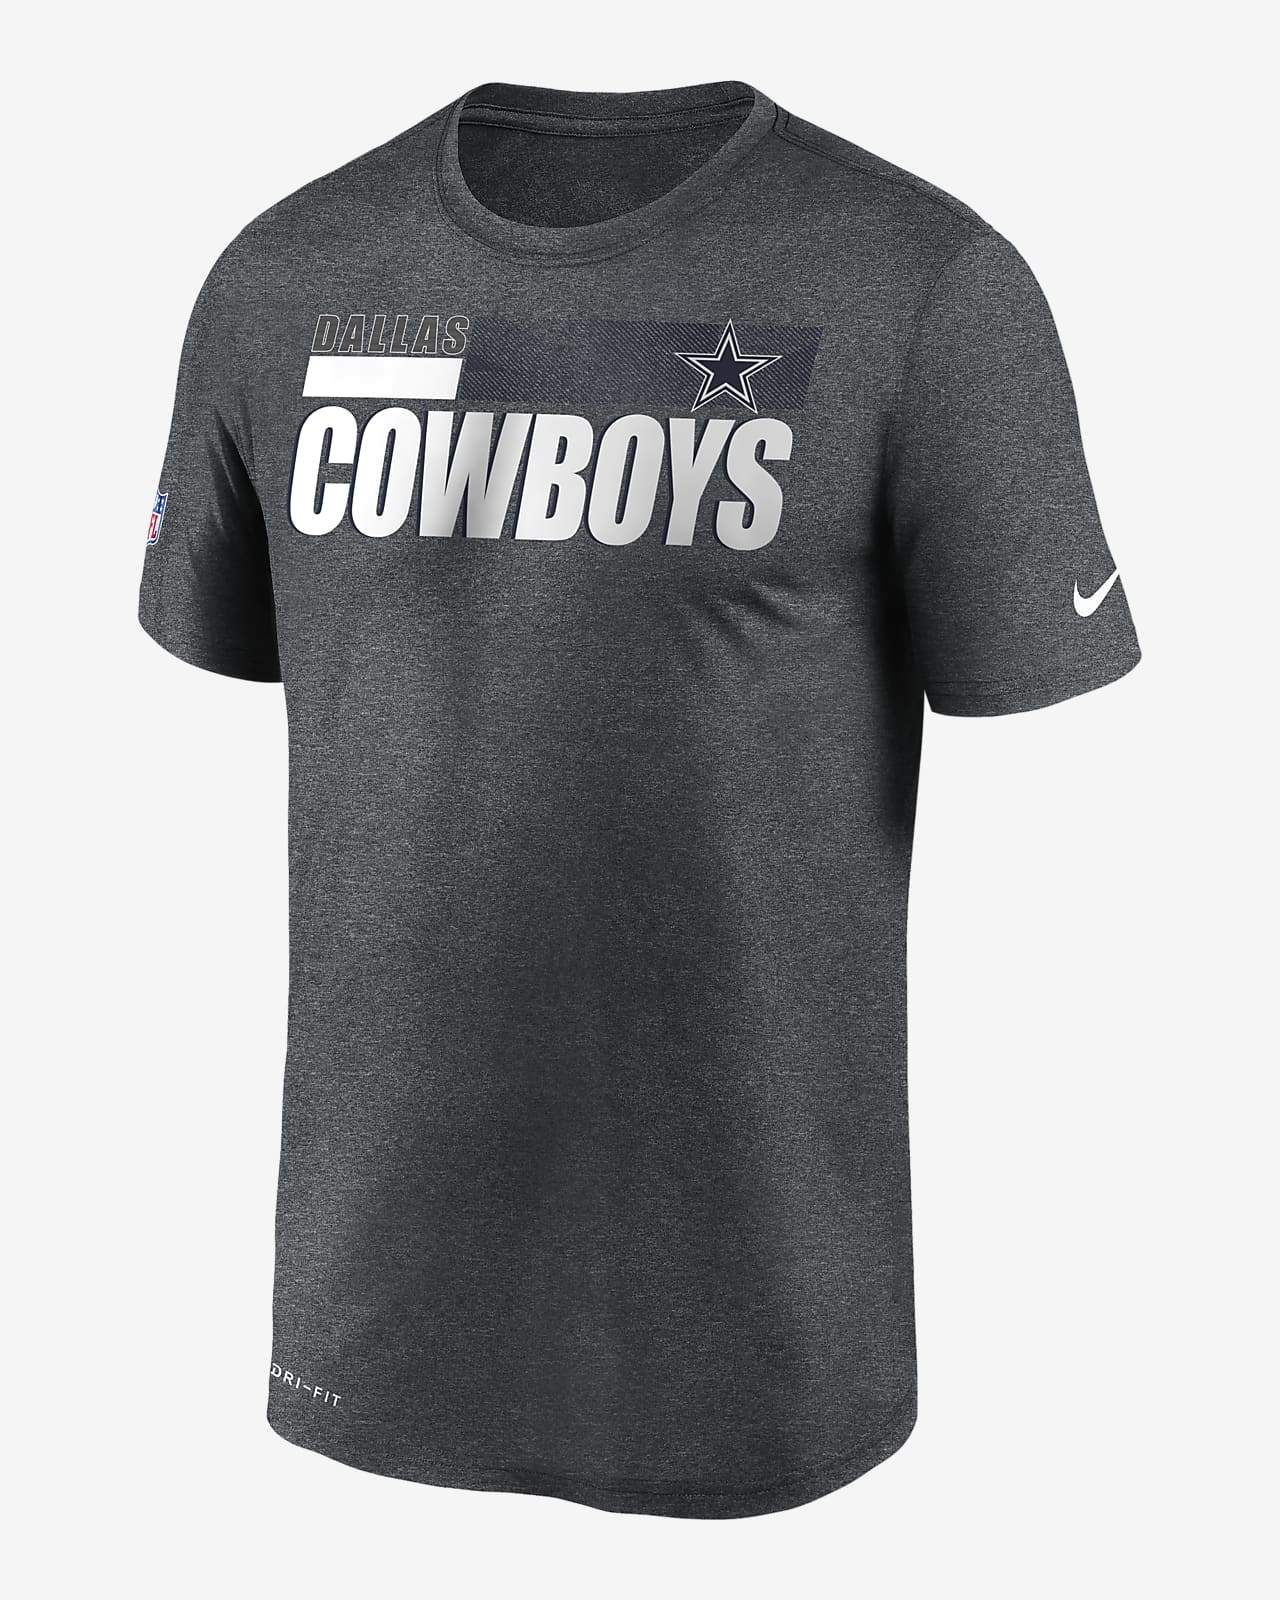 nike cowboys shirt